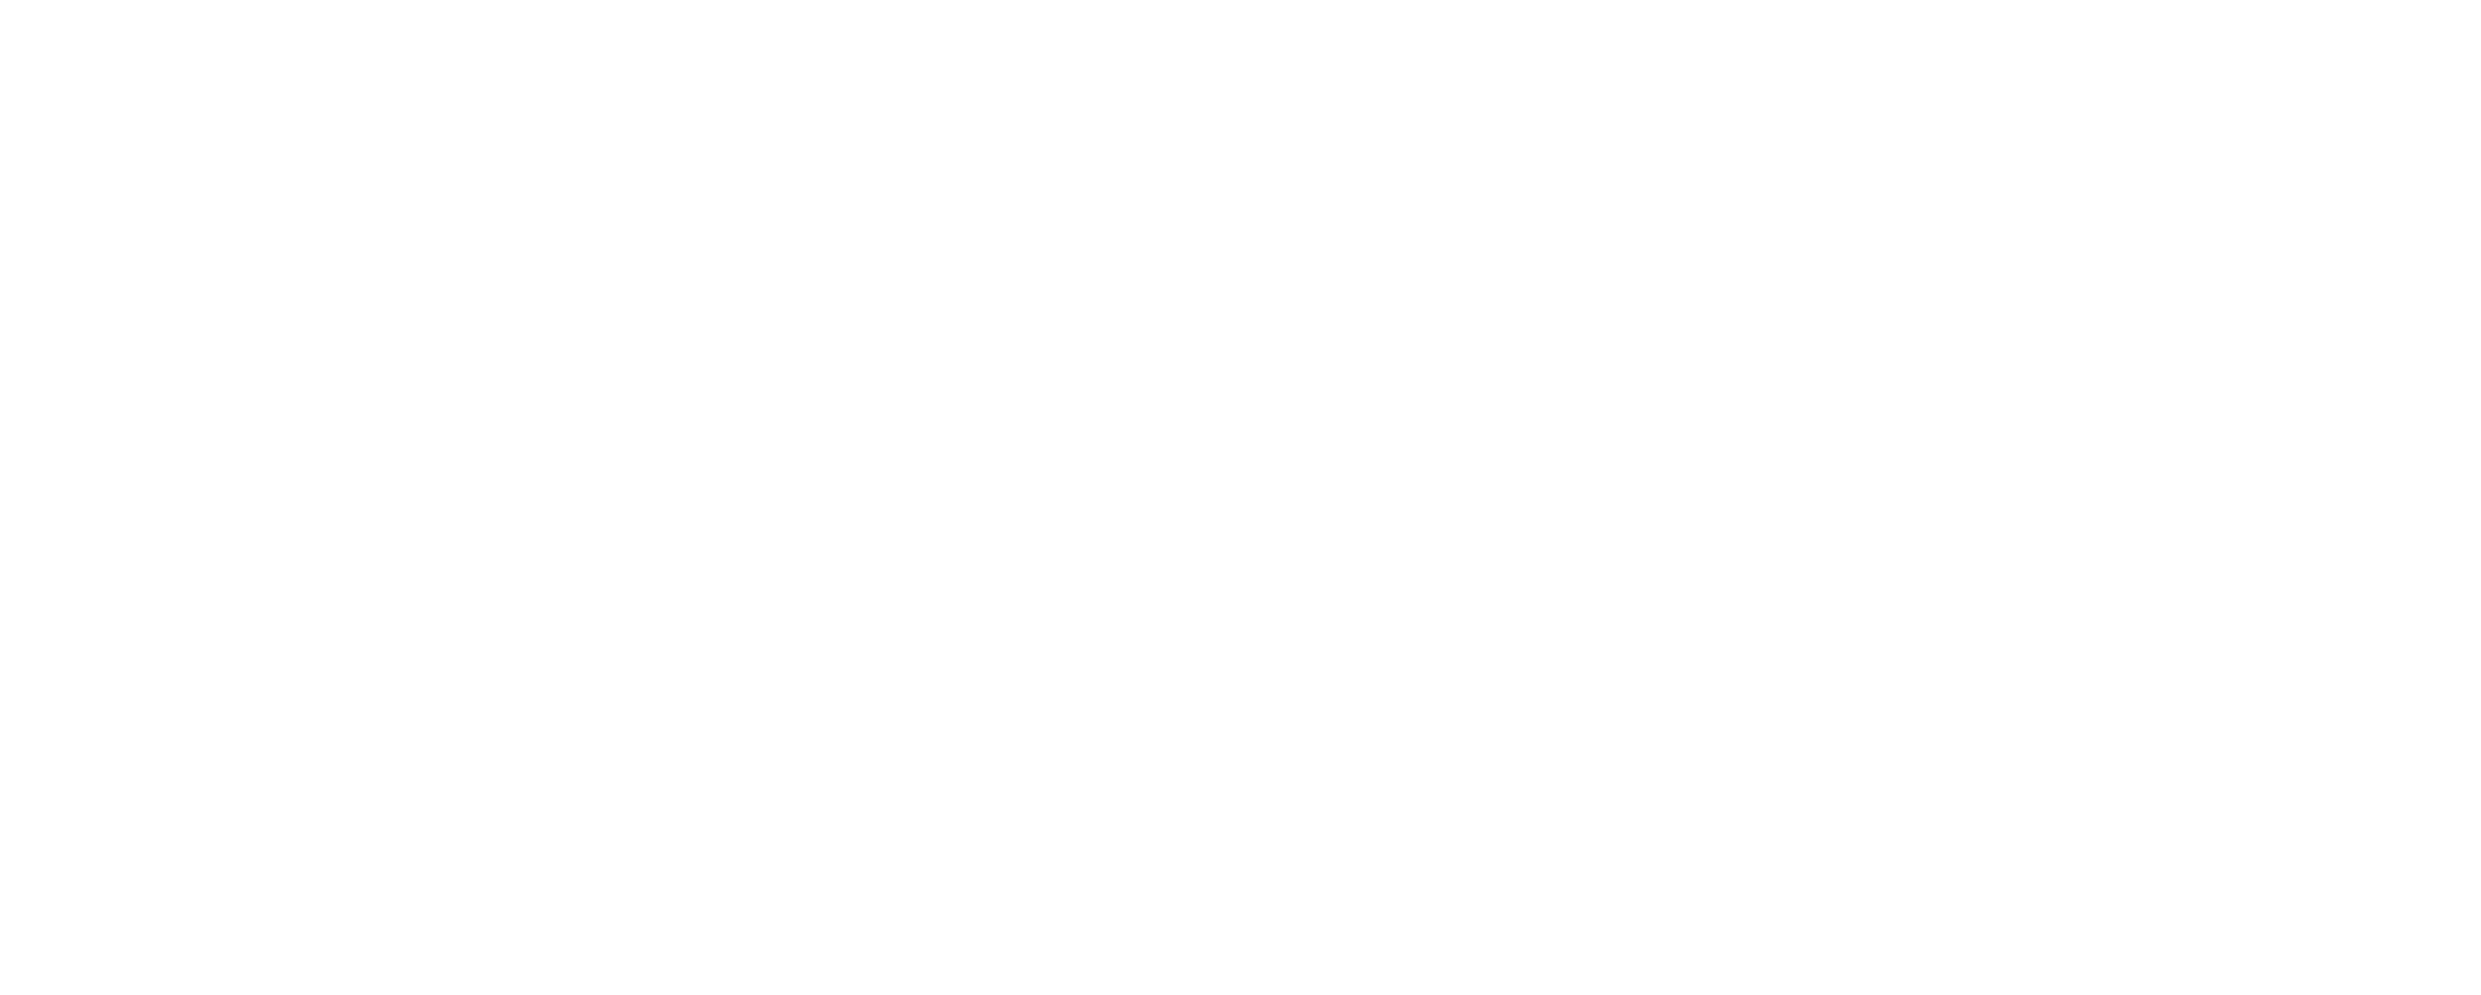 UU_logo white